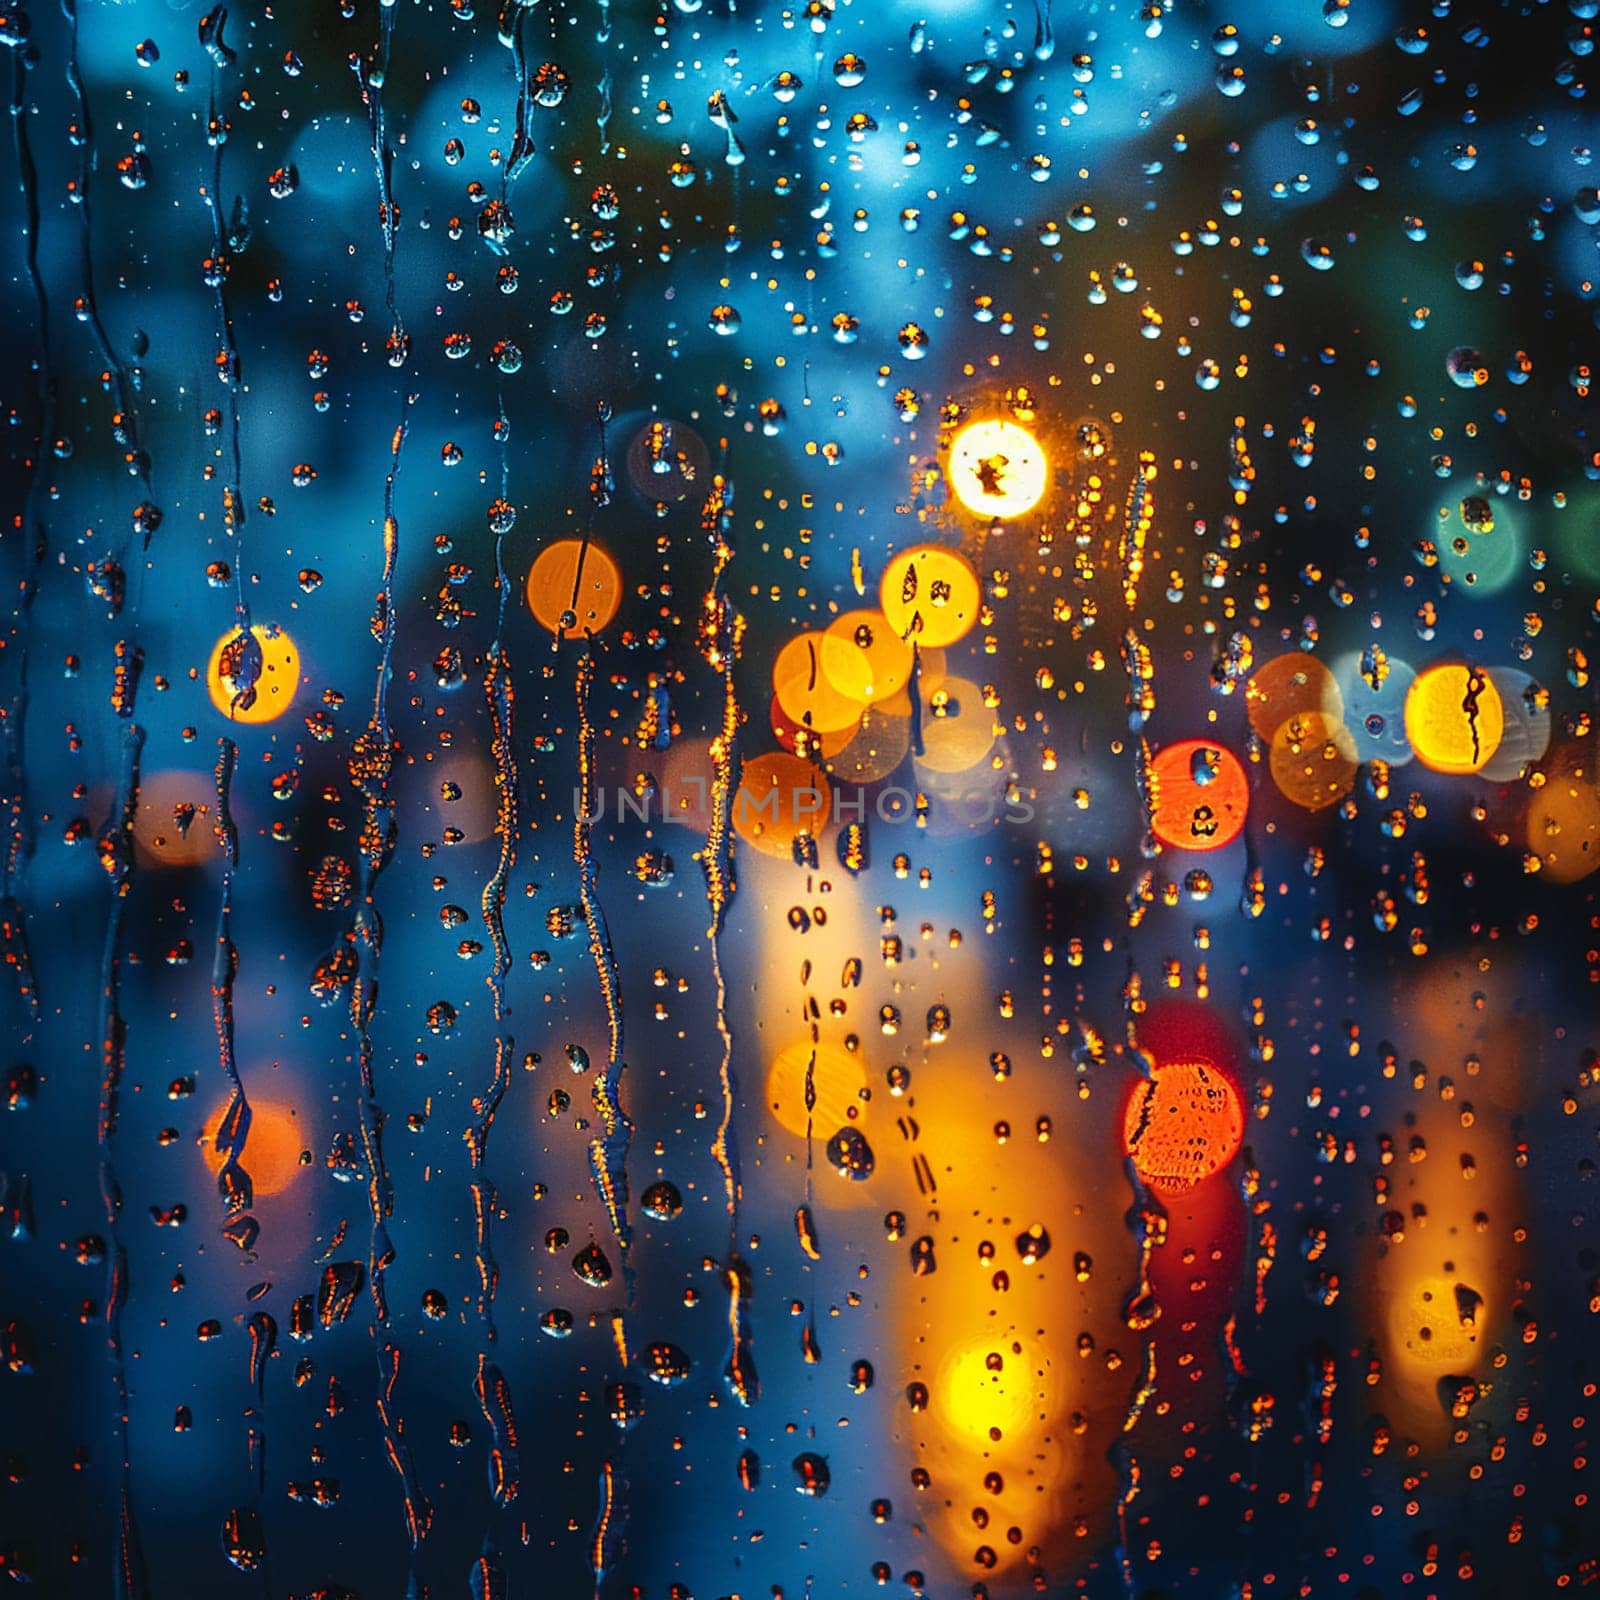 The mesmerizing pattern of rain on a window, a dance of drops